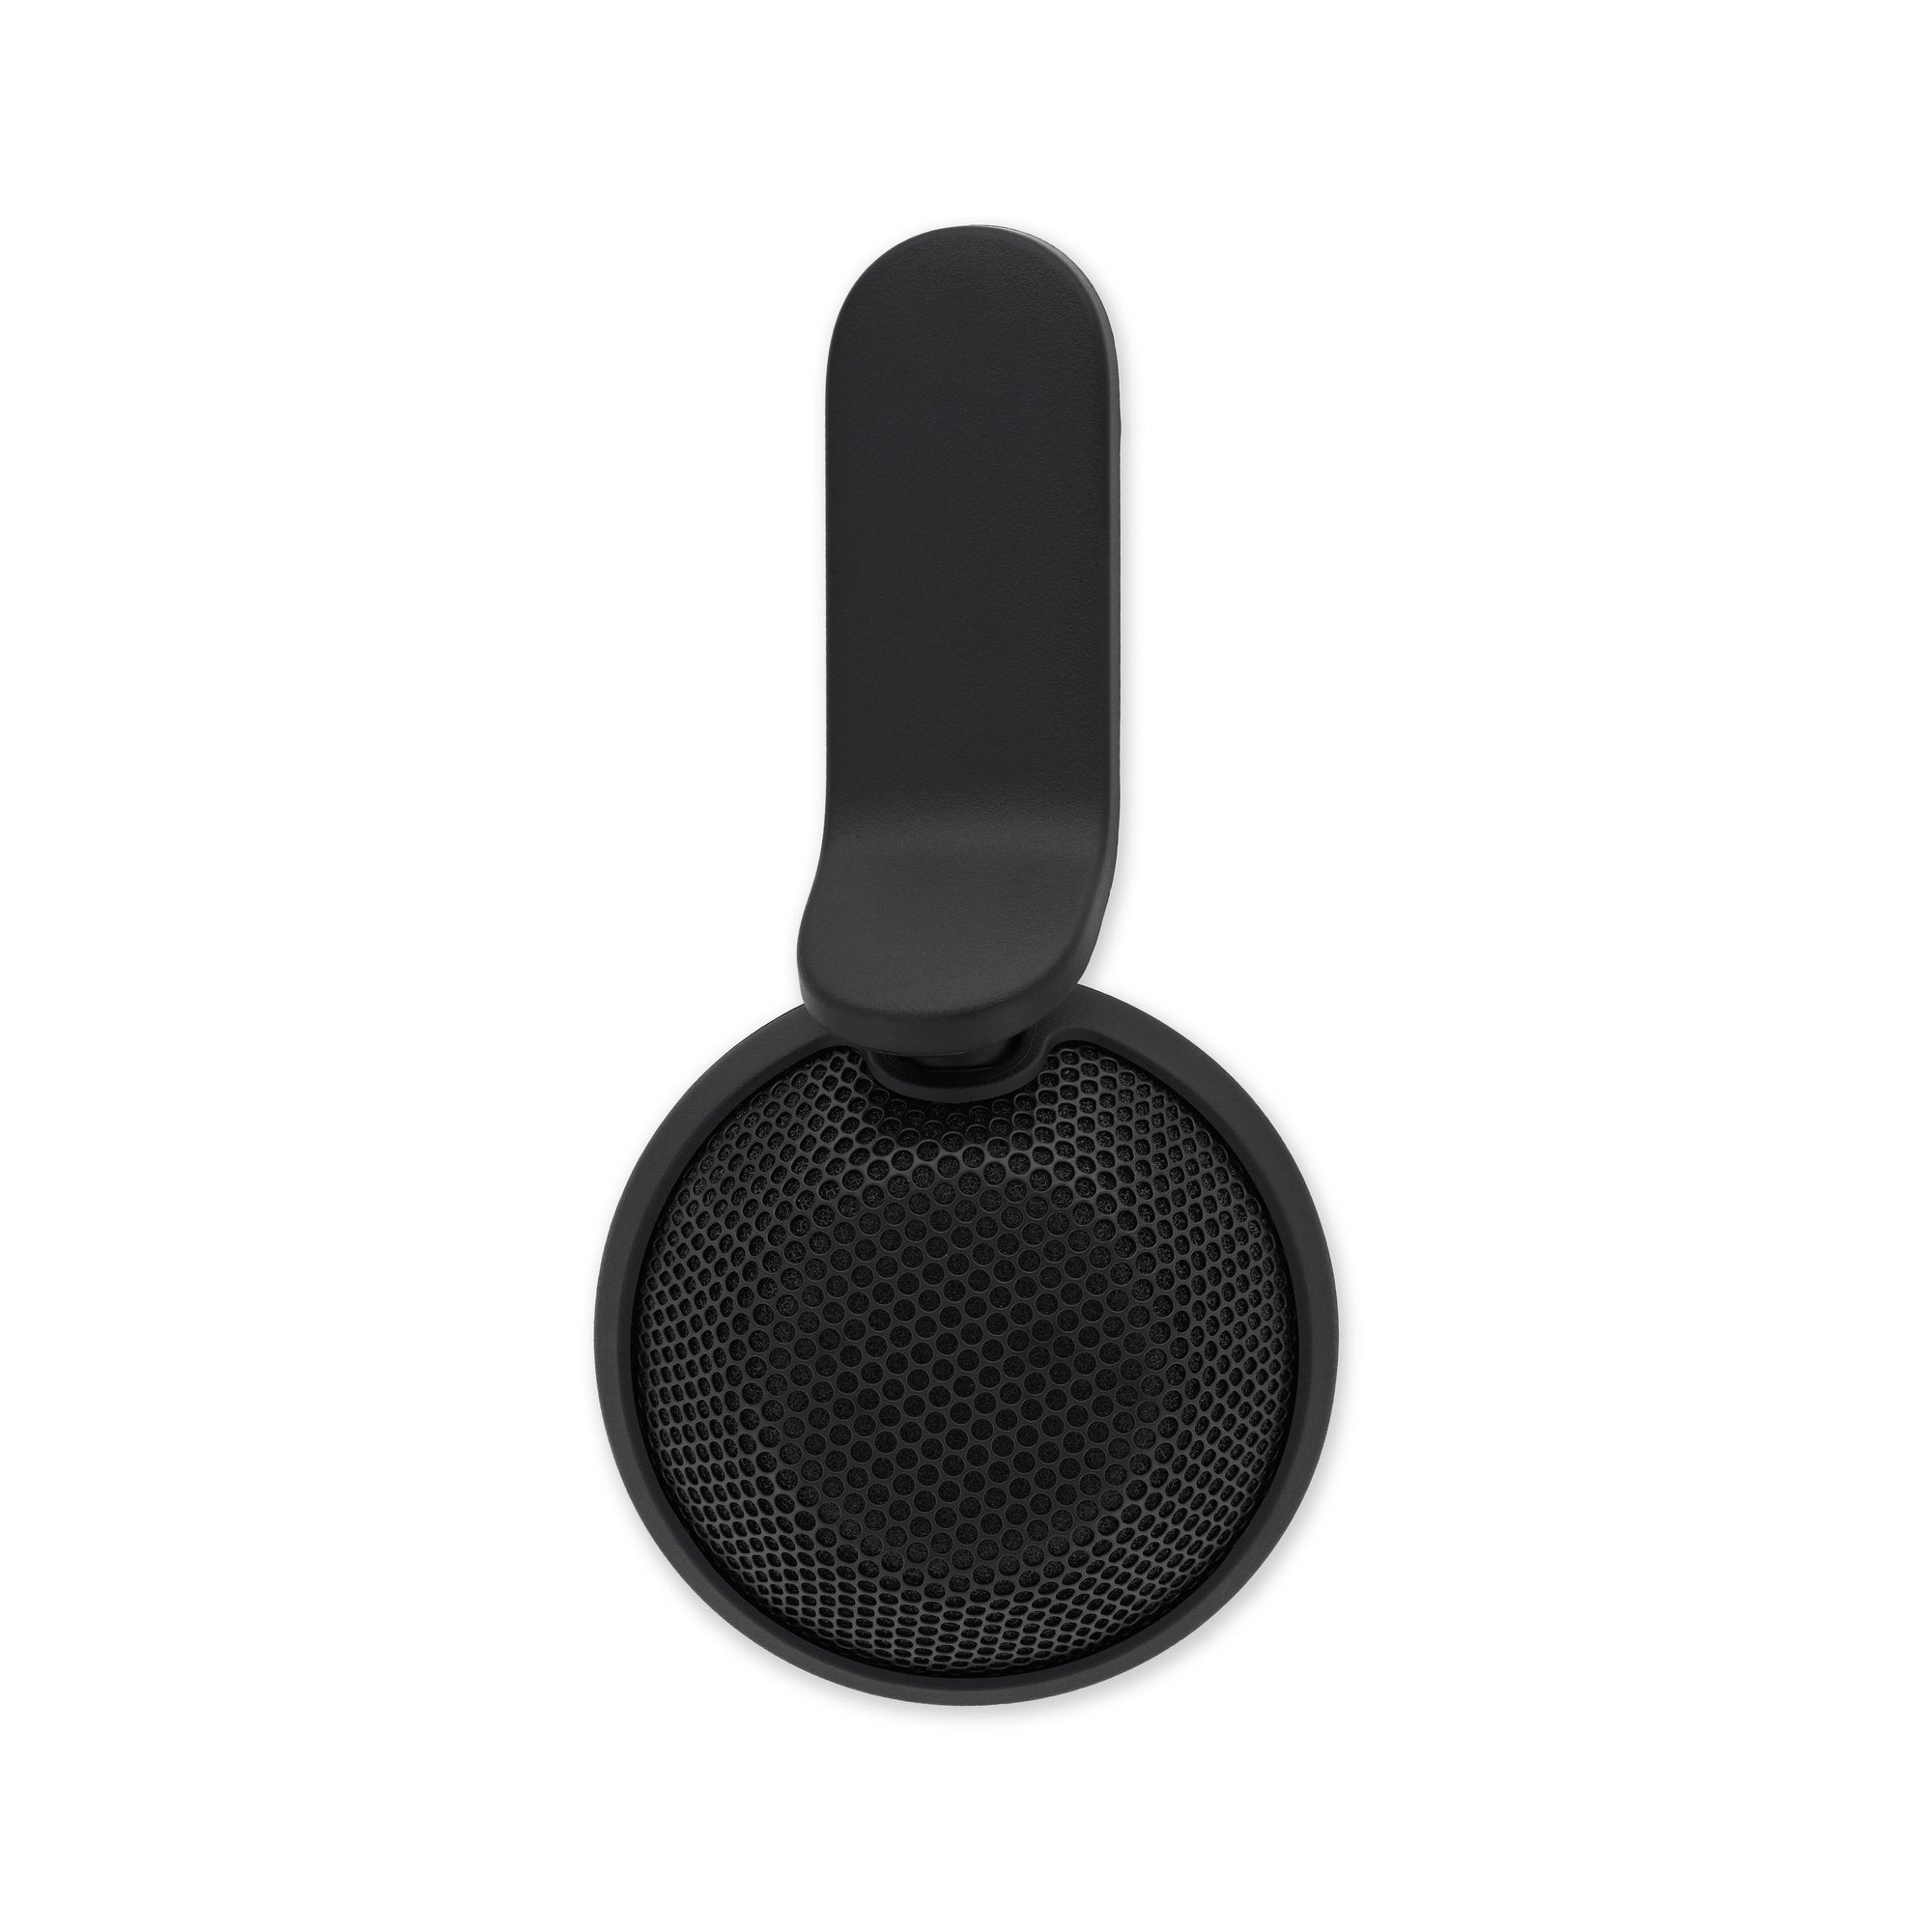 Valve Index Headset Right Speaker New Part Only